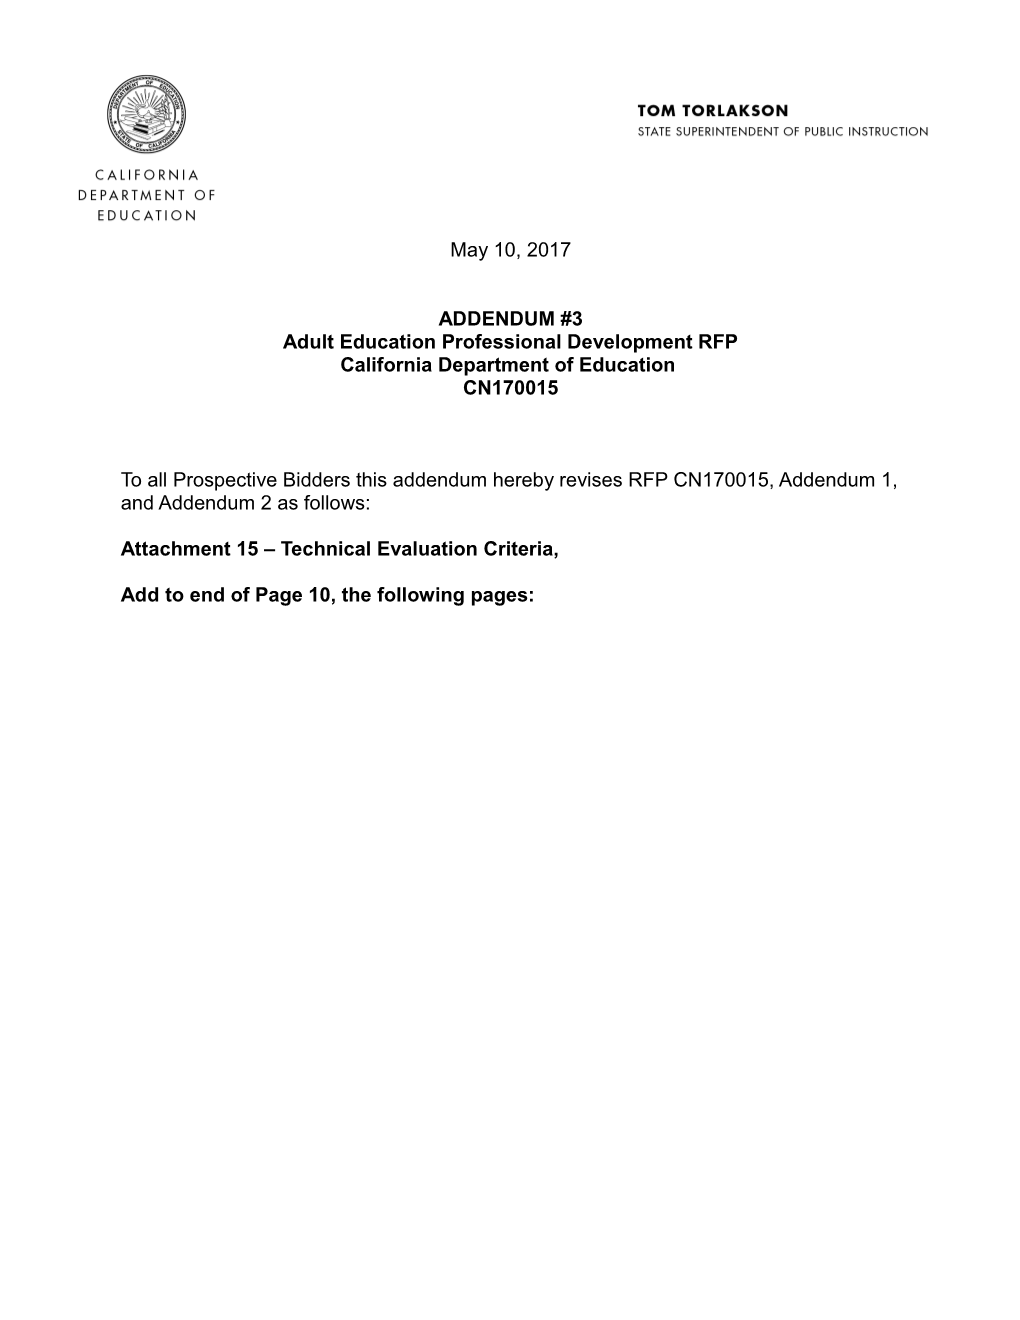 Addendum 3 RFP - AE PD (CA Dept of Education)